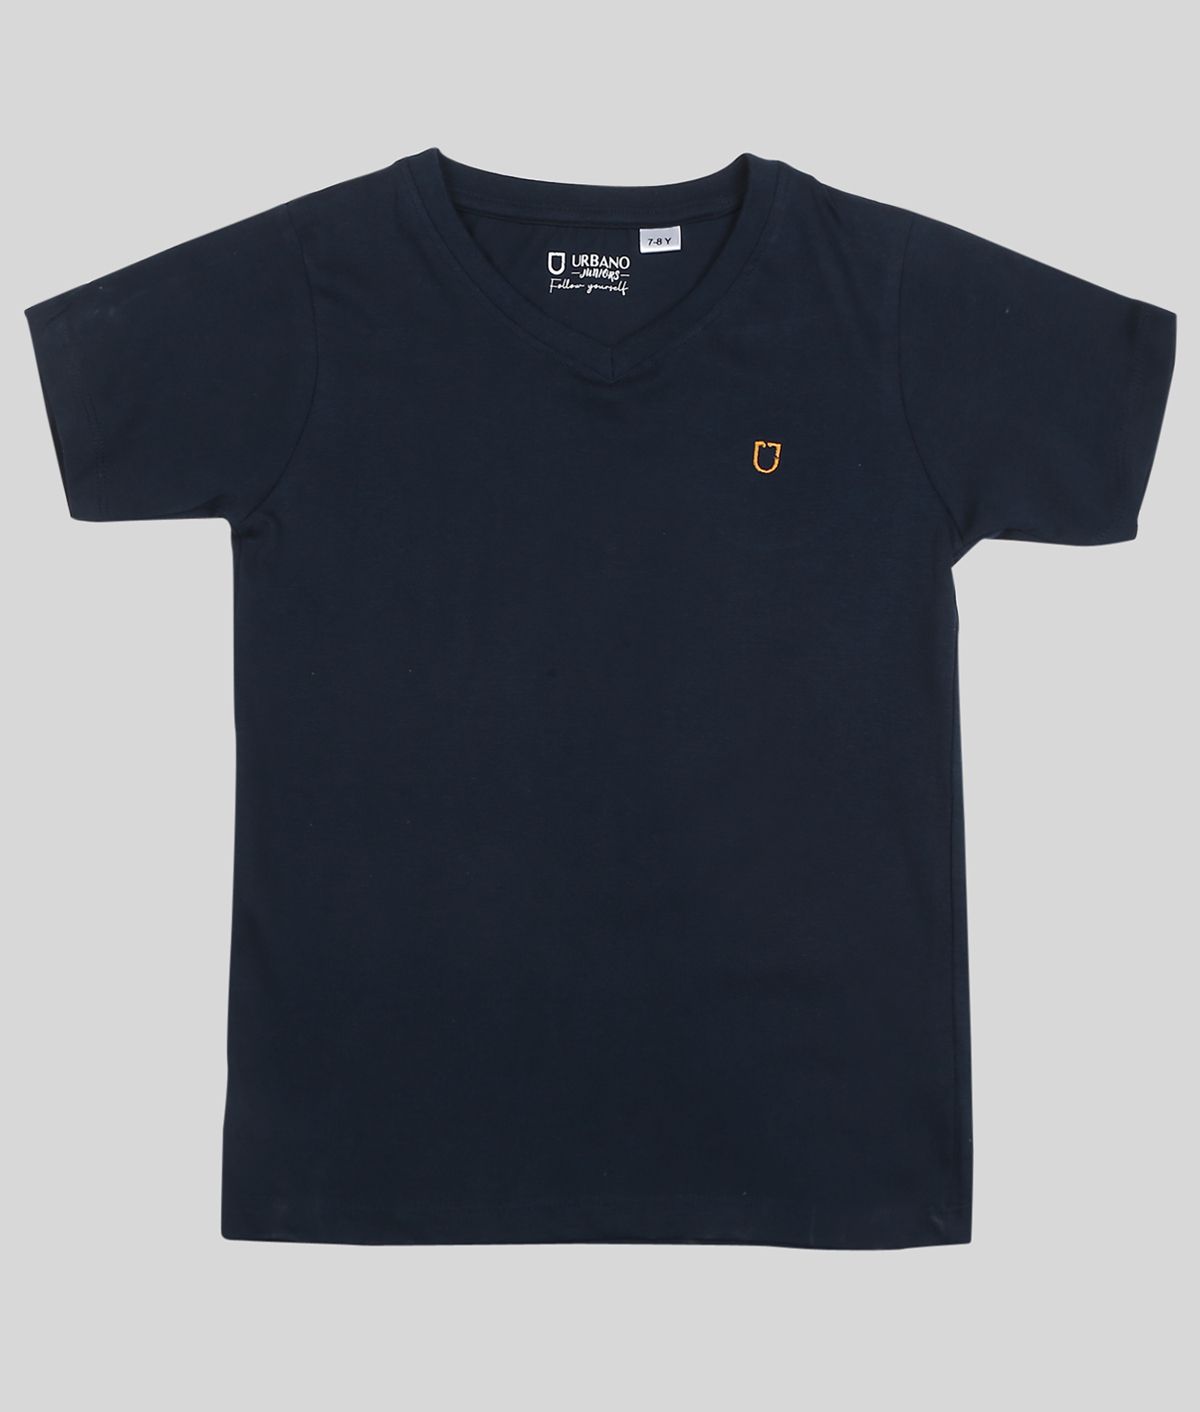 Urbano Juniors - Navy Blue Cotton Boy's T-Shirt ( Pack of 1 )